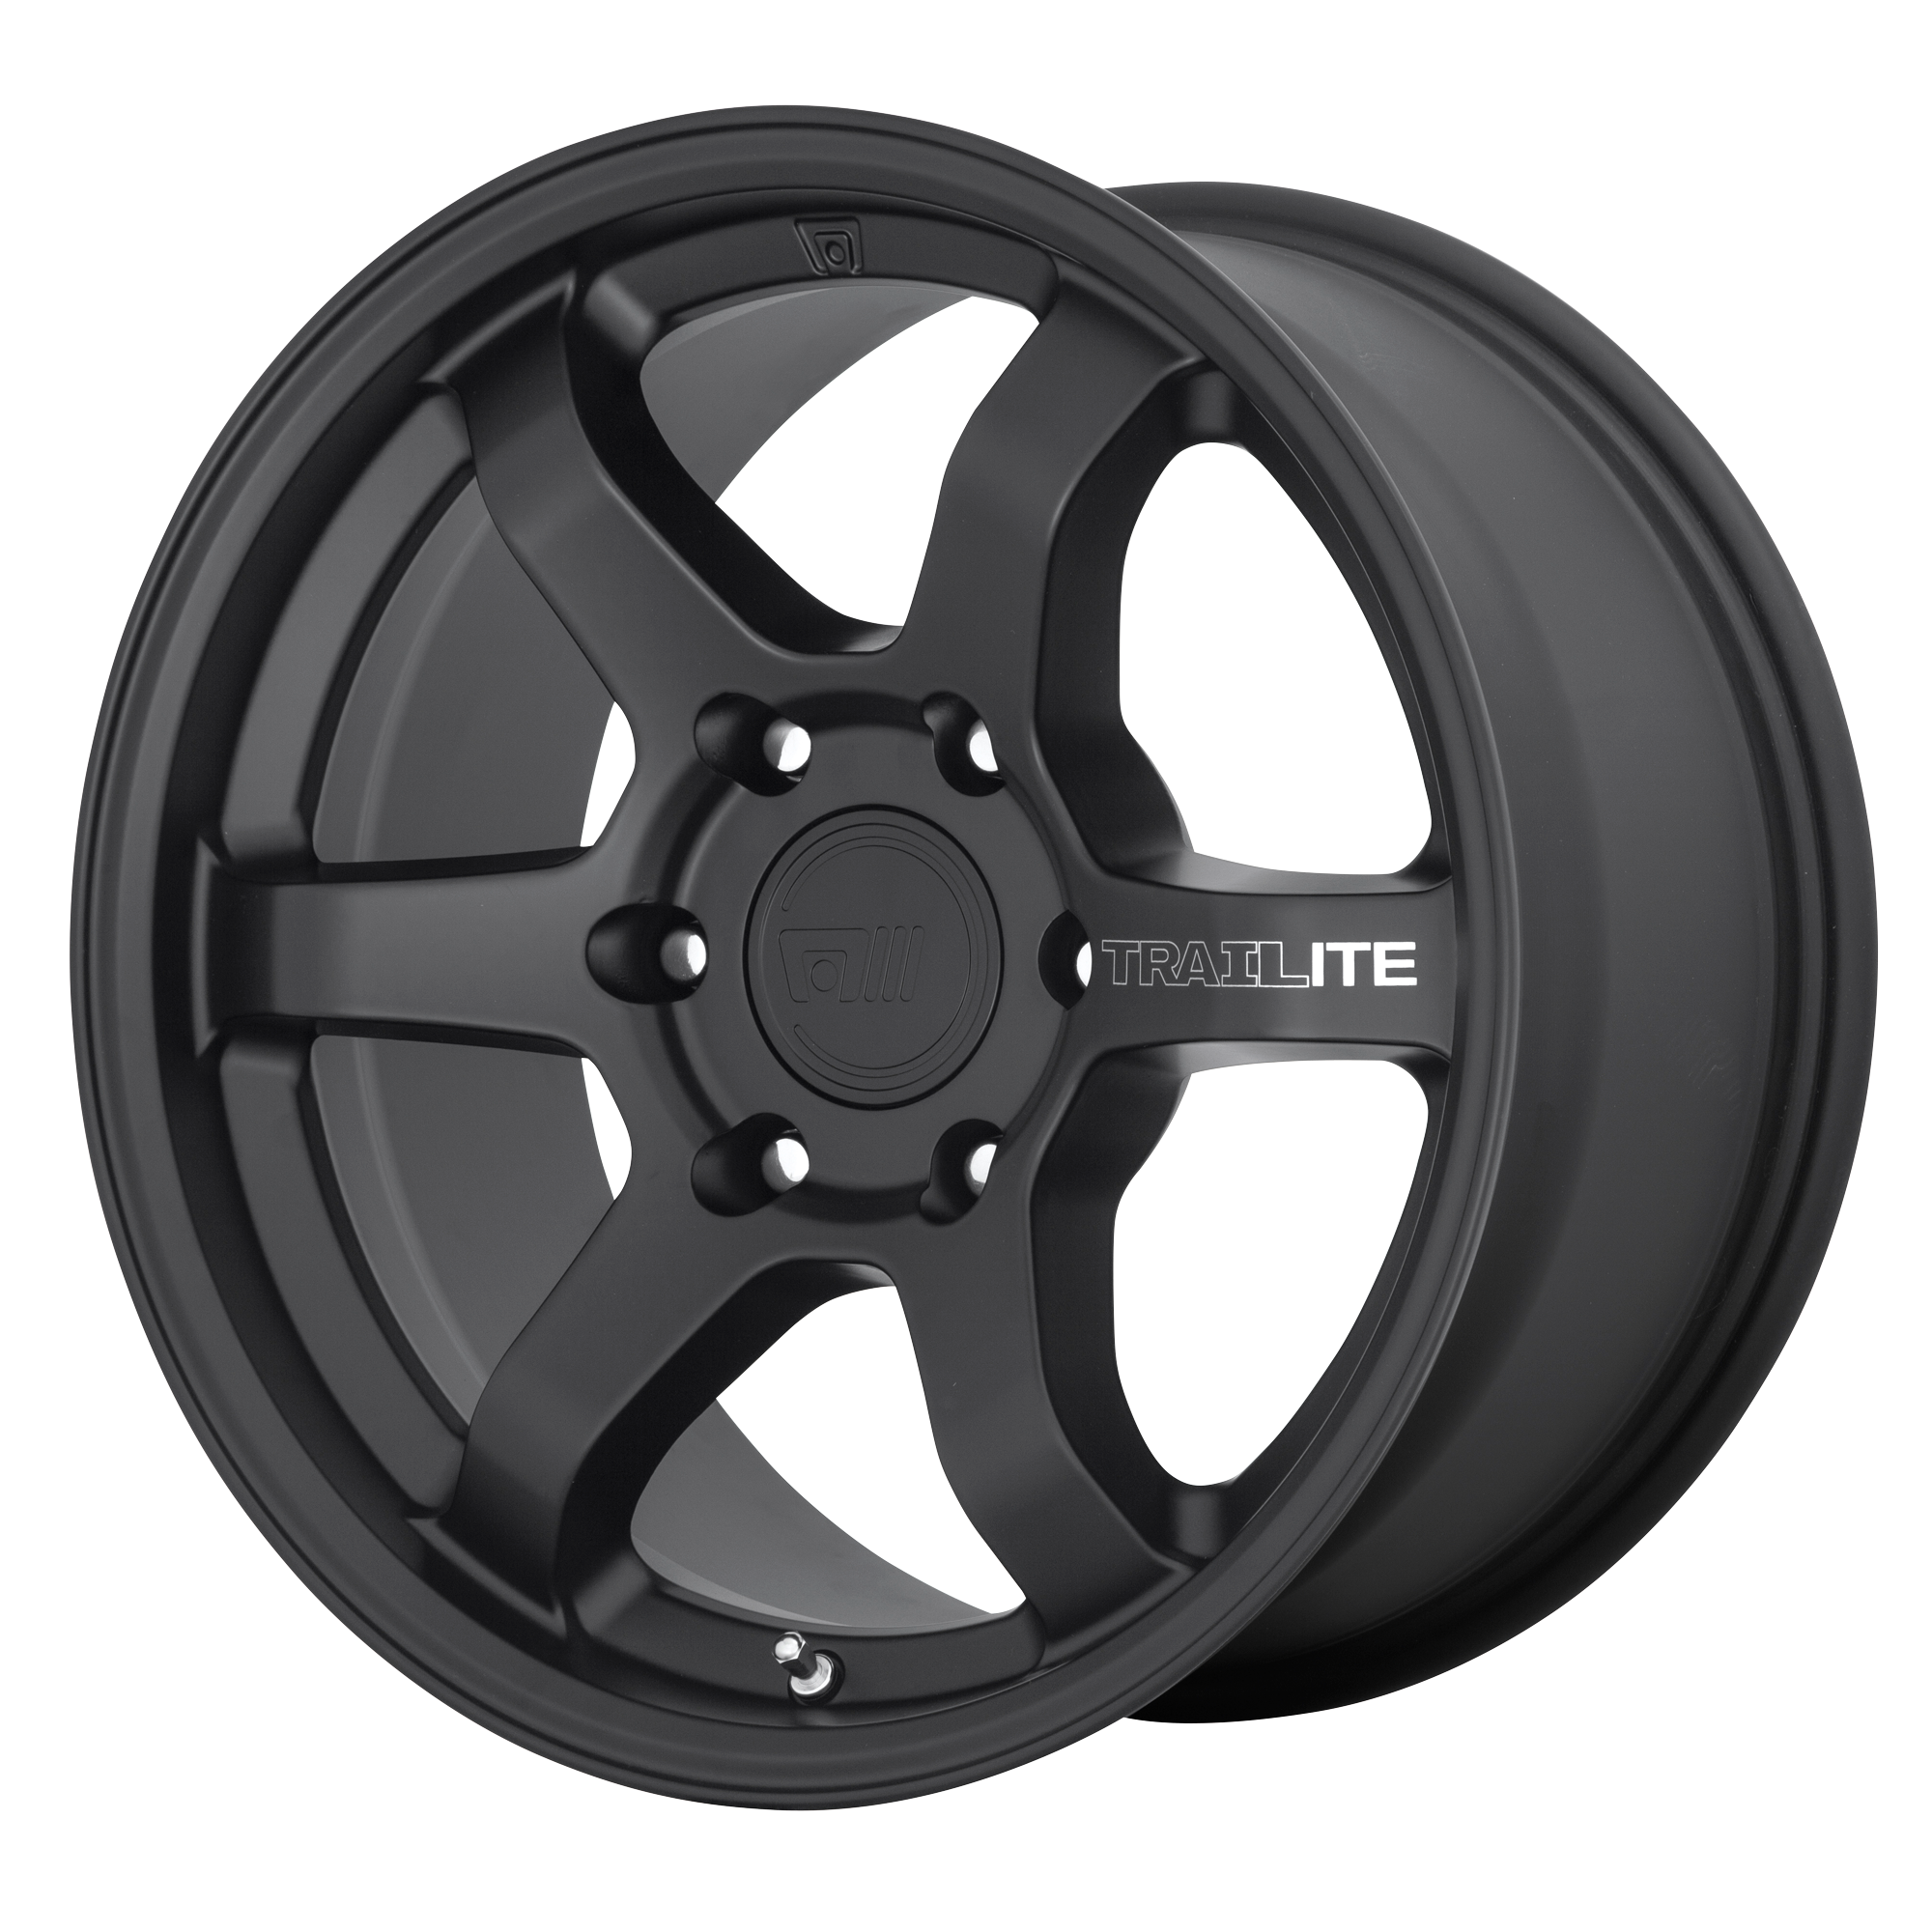 TRAILITE 17x8.5 6x135.00 SATIN BLACK (18 mm) - Tires and Engine Performance